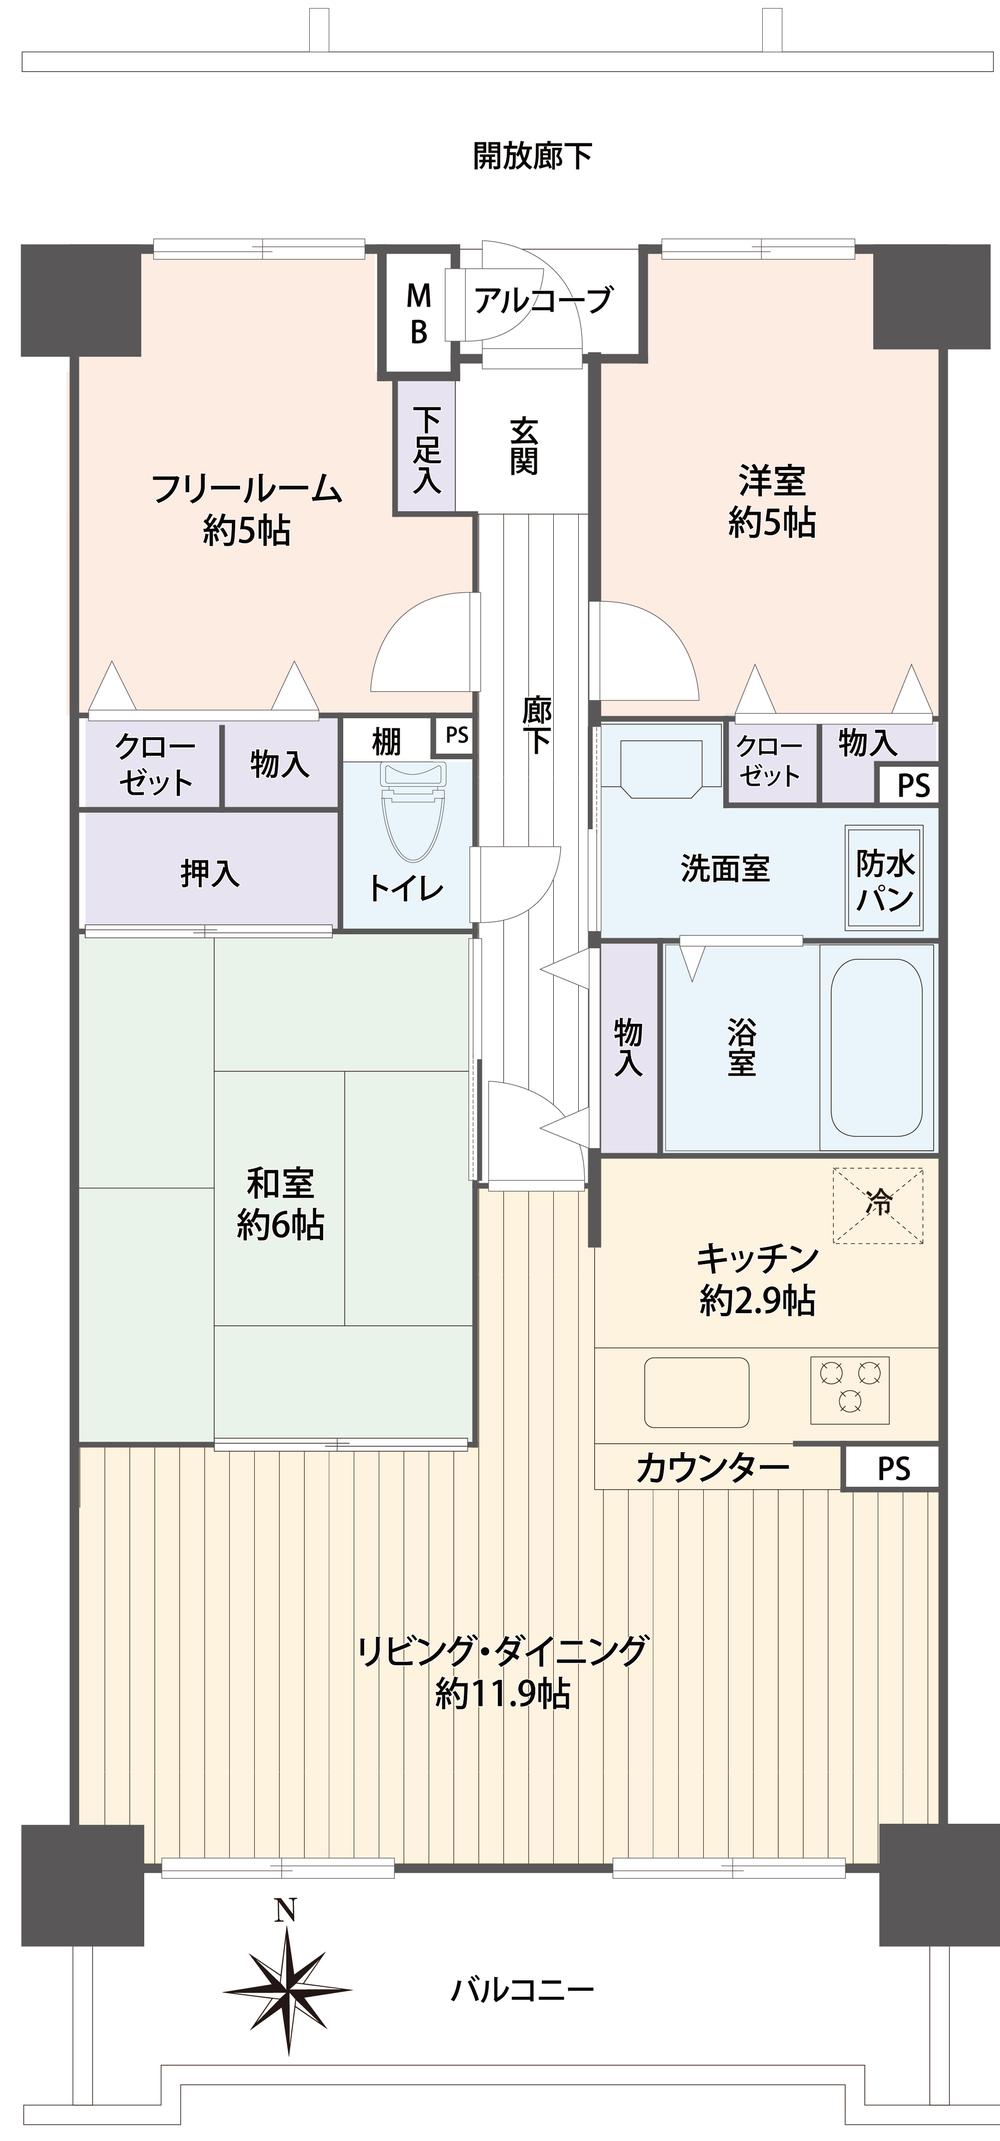 Floor plan. 3LDK, Price 11.8 million yen, Occupied area 66.36 sq m , Balcony area 9.03 sq m